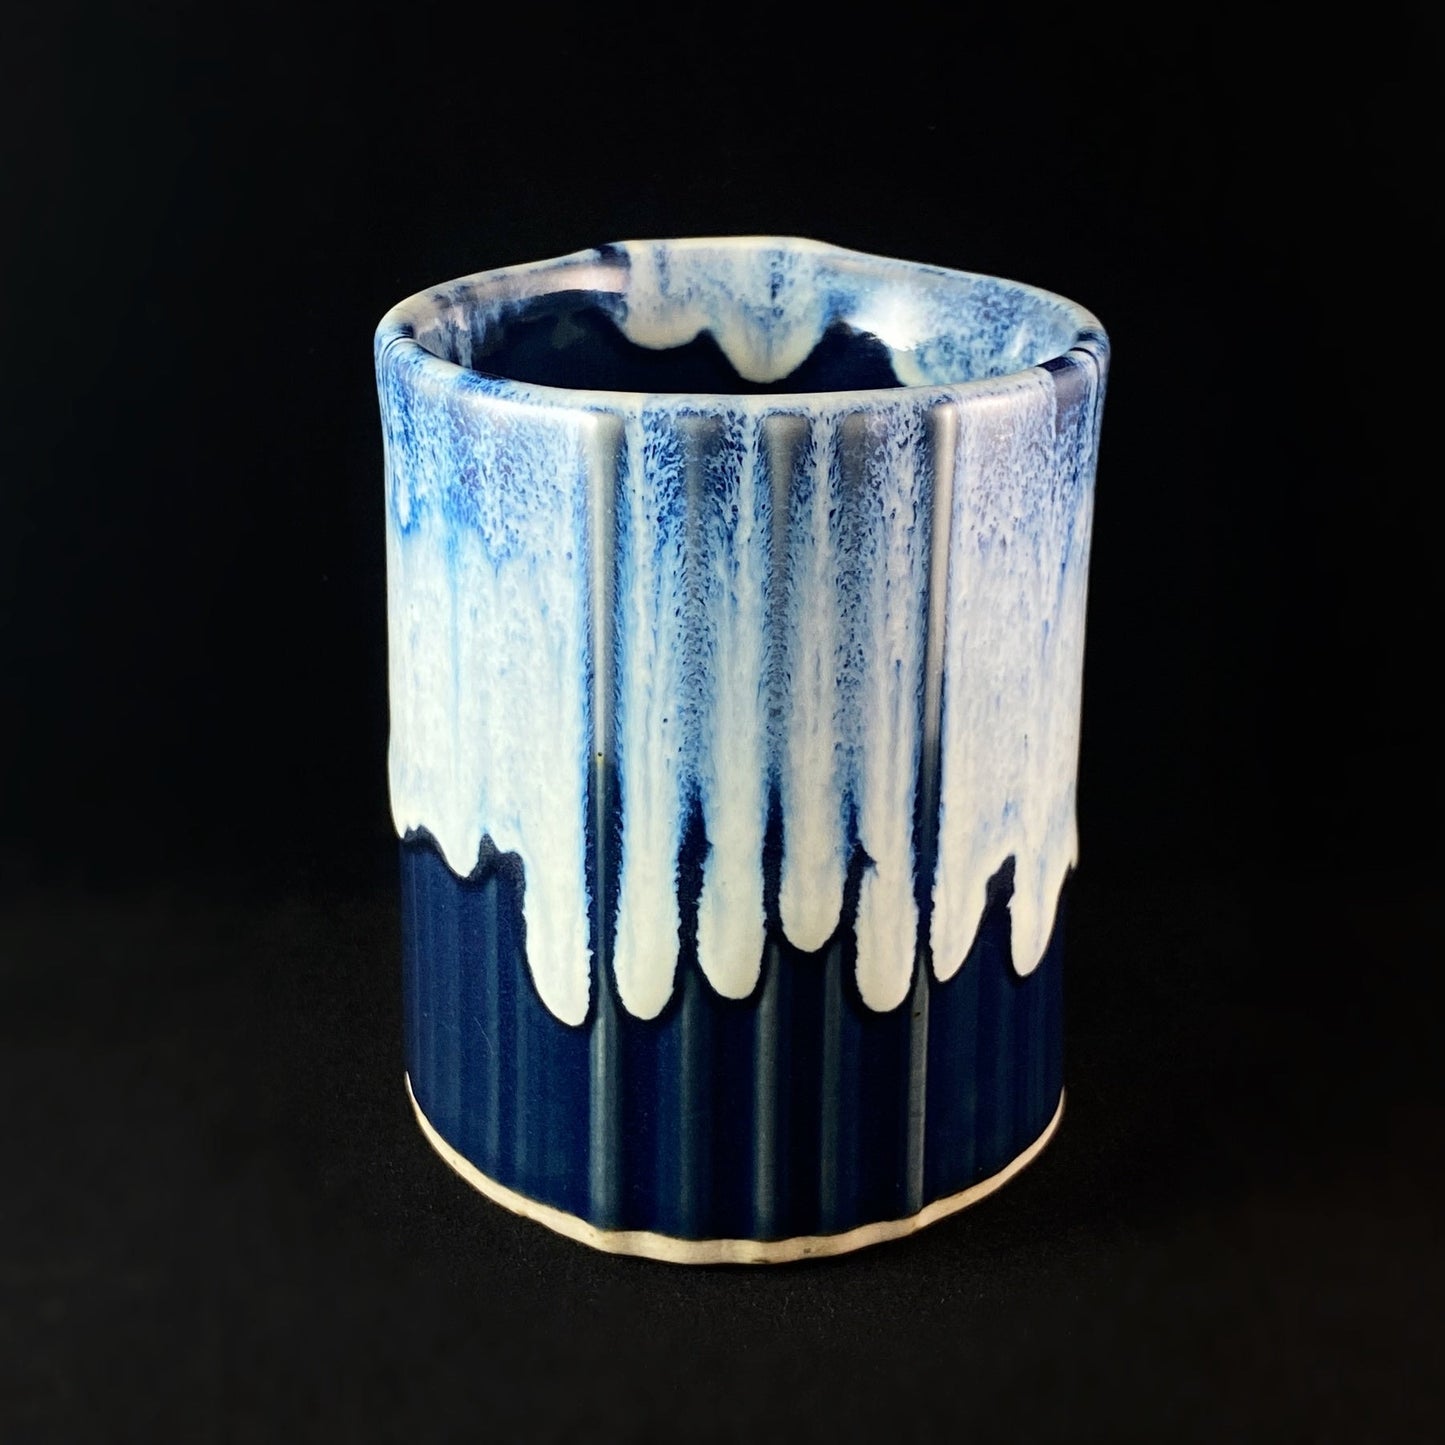 12 oz. Bay Mug Functional Pottery Handmade in USA - Navy